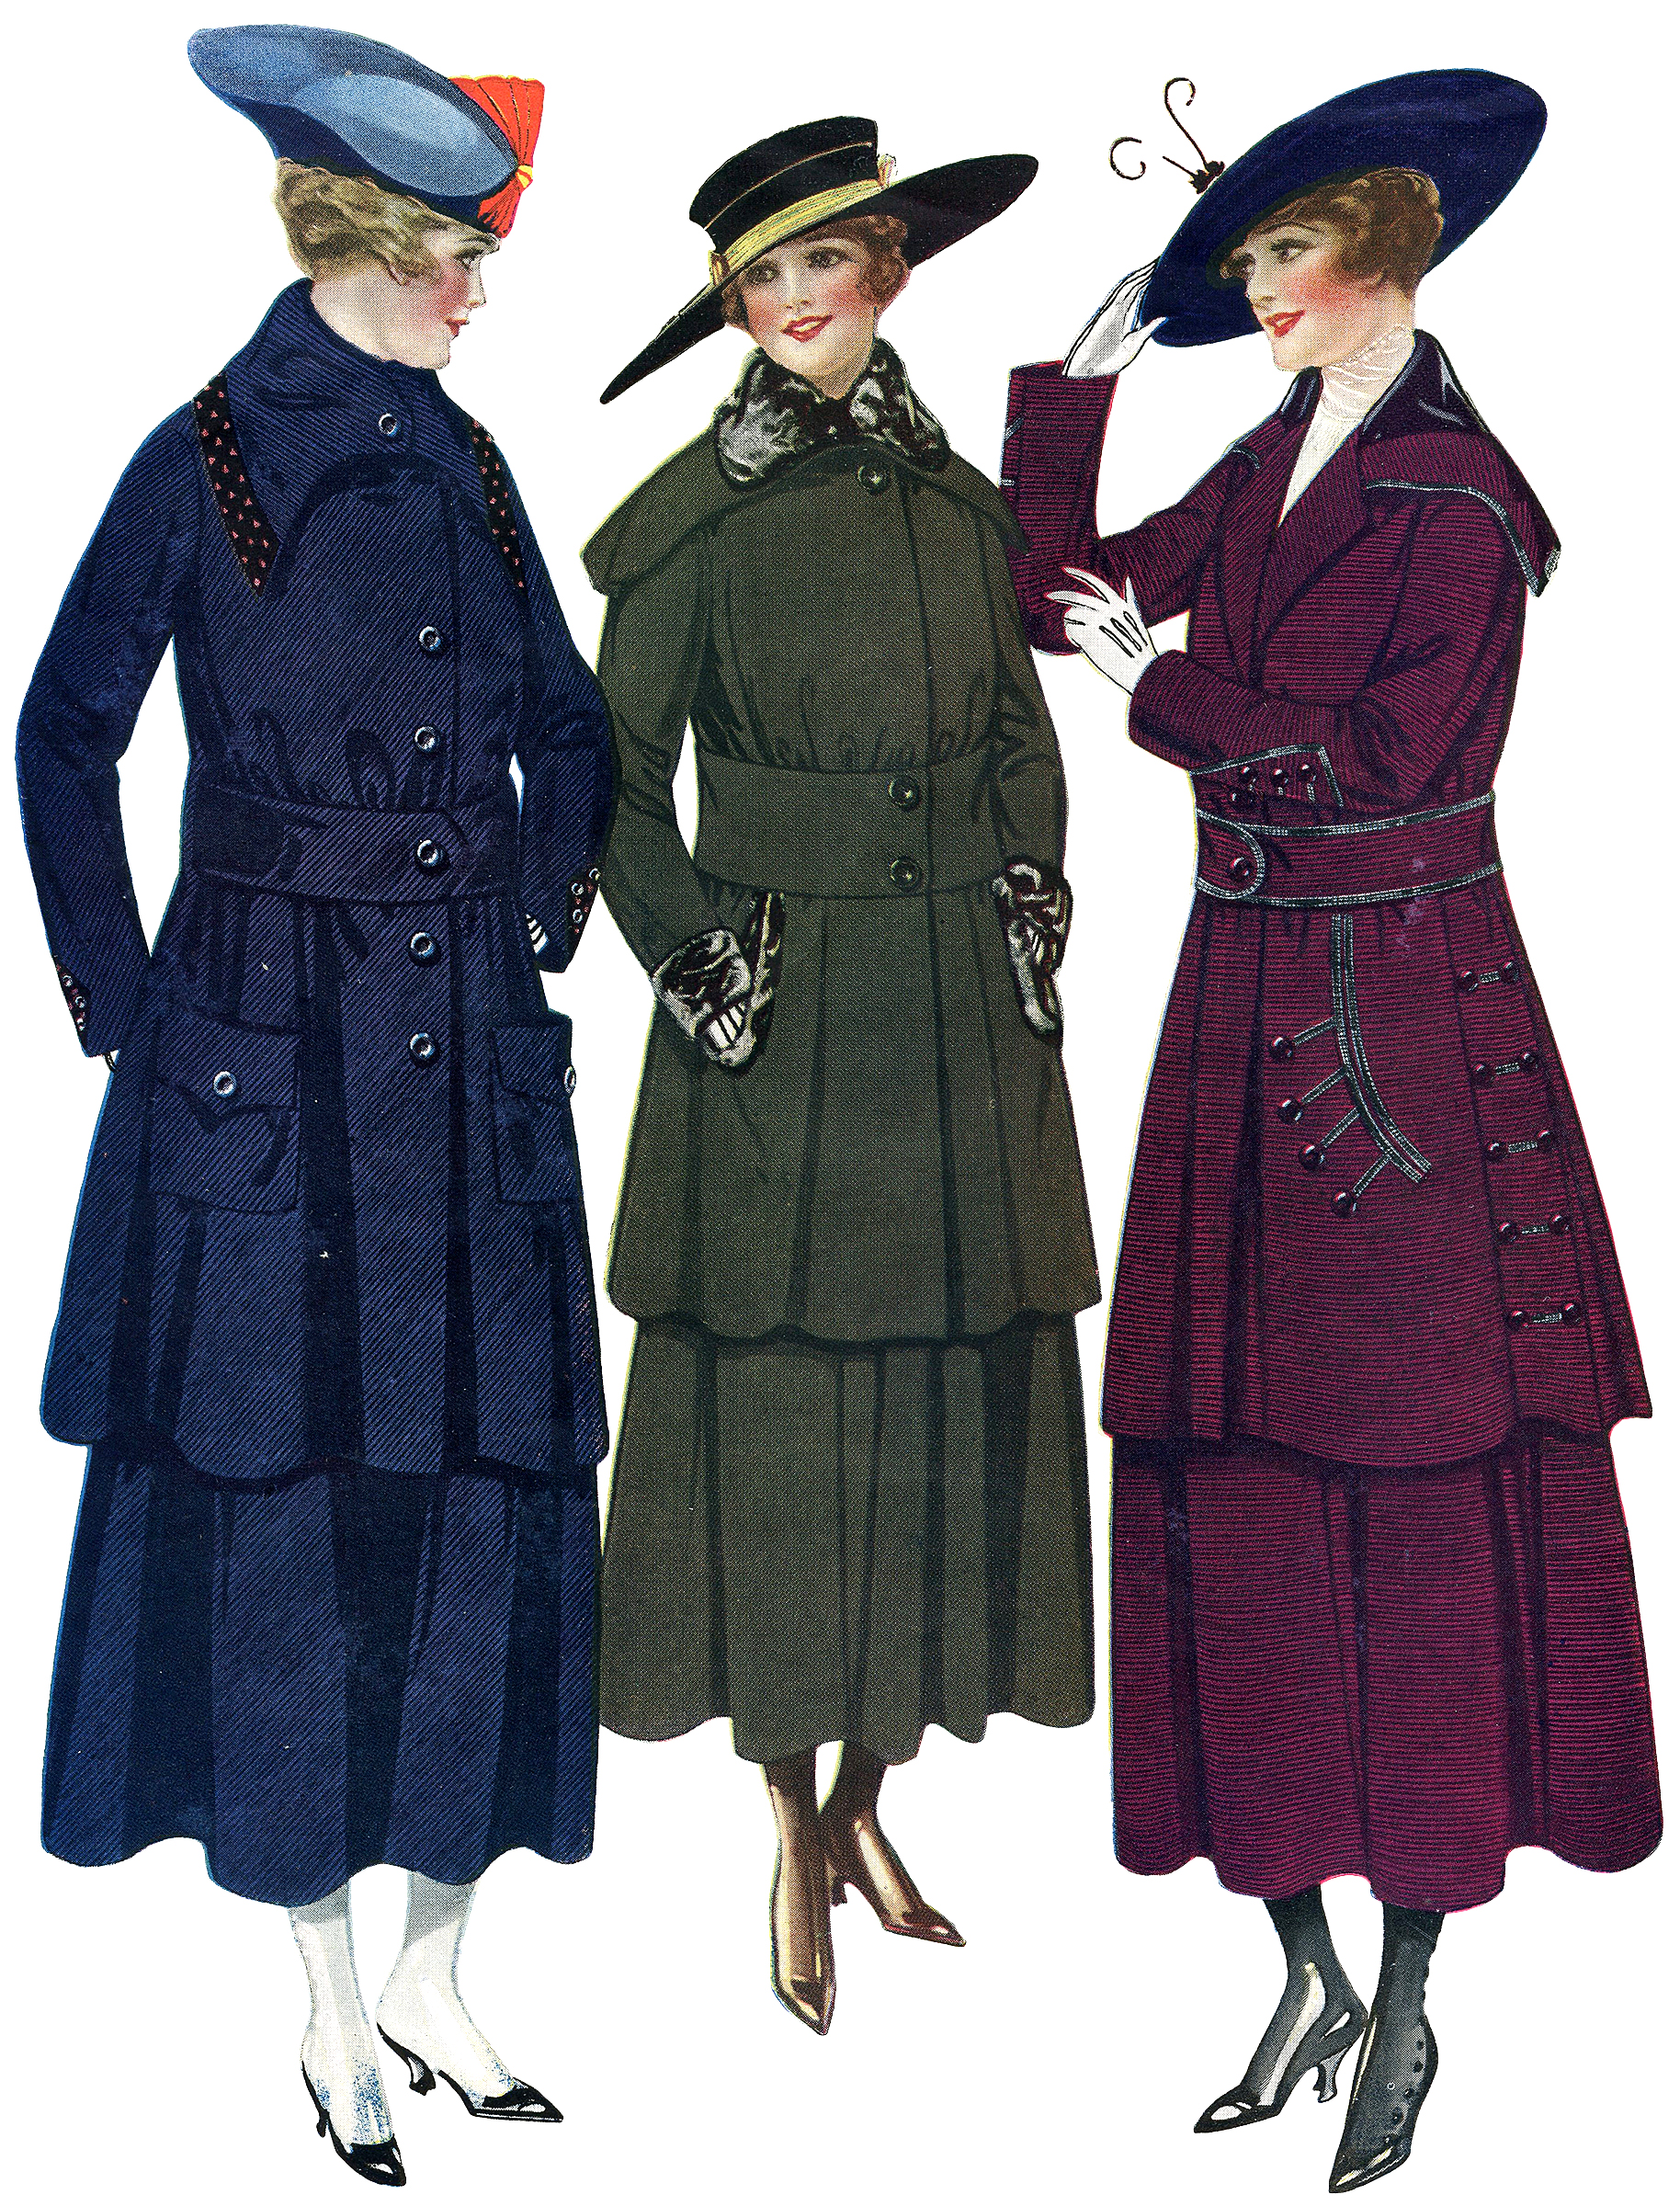 14 Edwardian Fashion Images - (Women's Fashion) - The Graphics Fairy